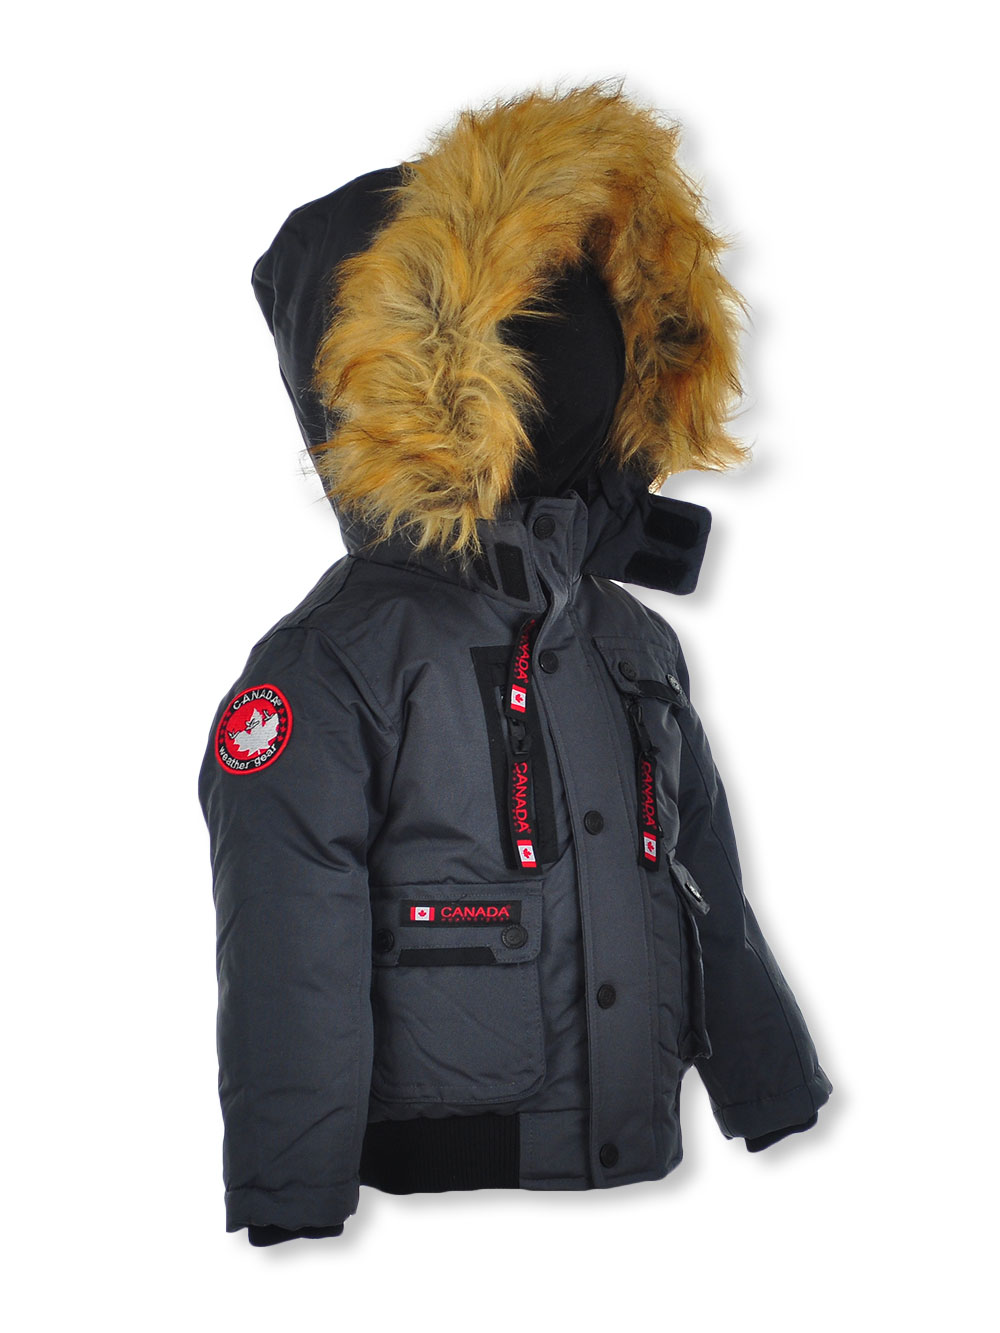 Canada Weather Gear Boys' Insulated Jacket 